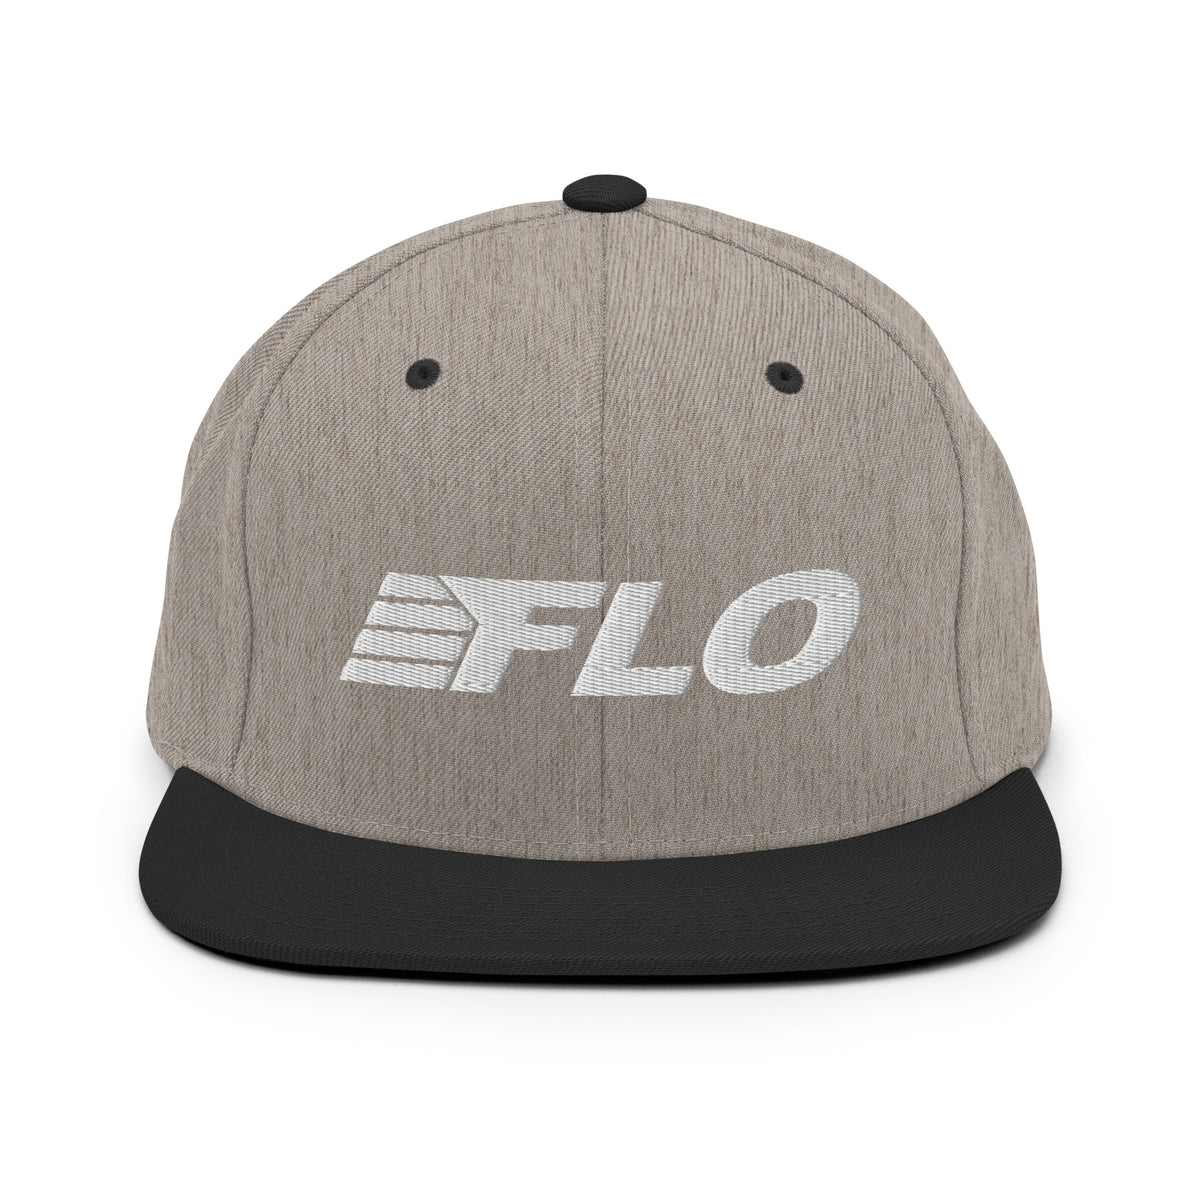 FLO Logo Hat